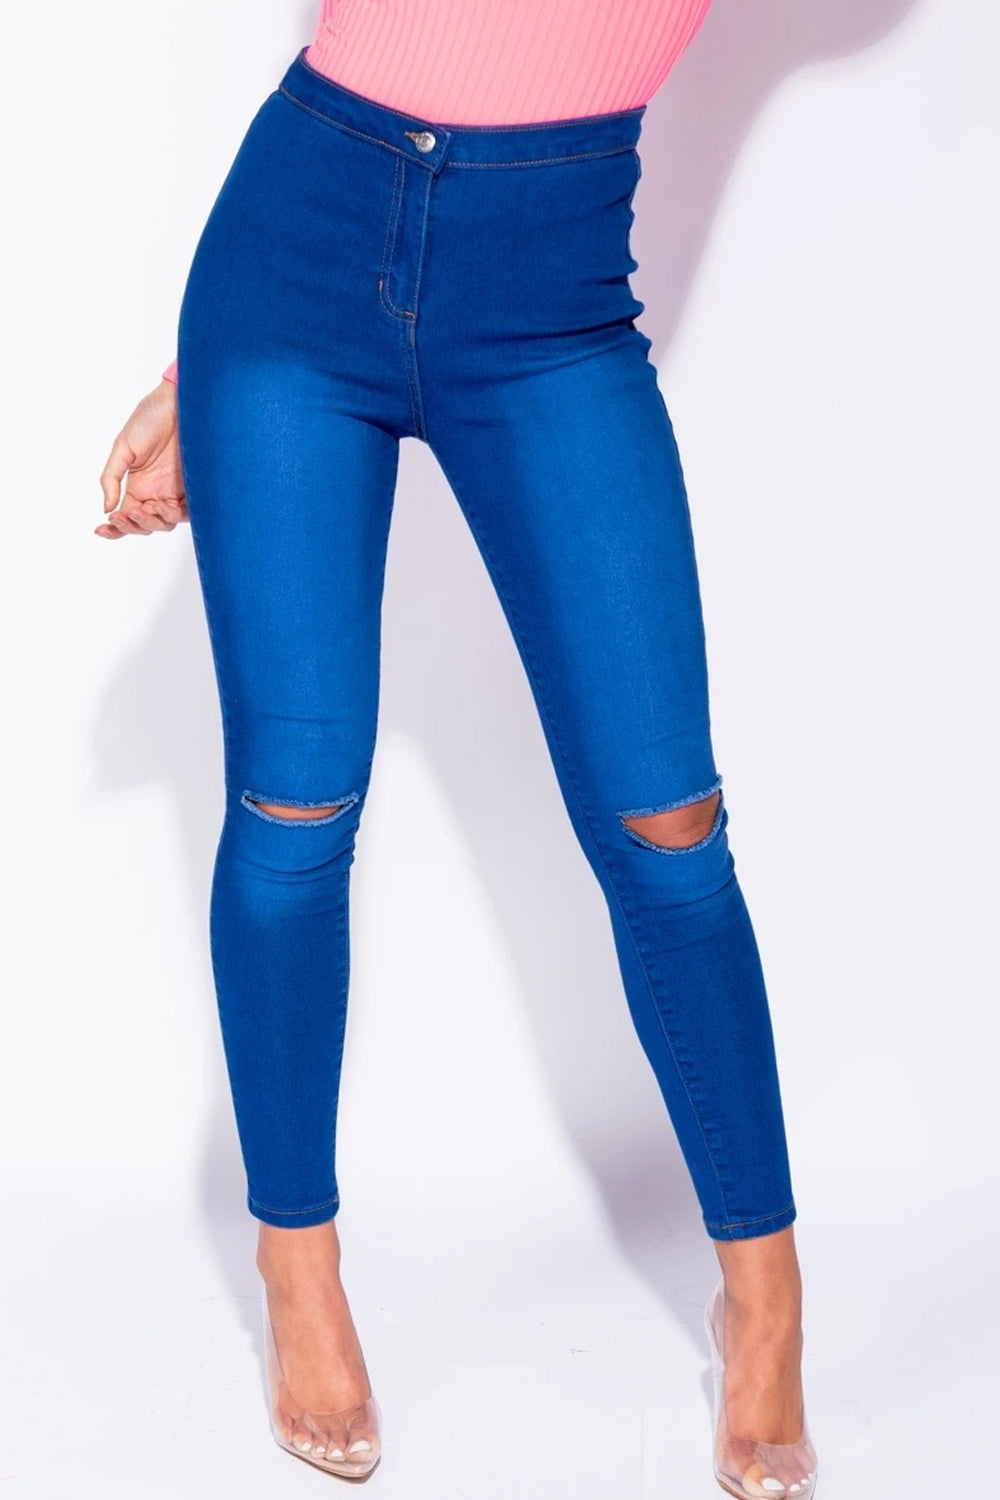 bright blue skinny jeans womens